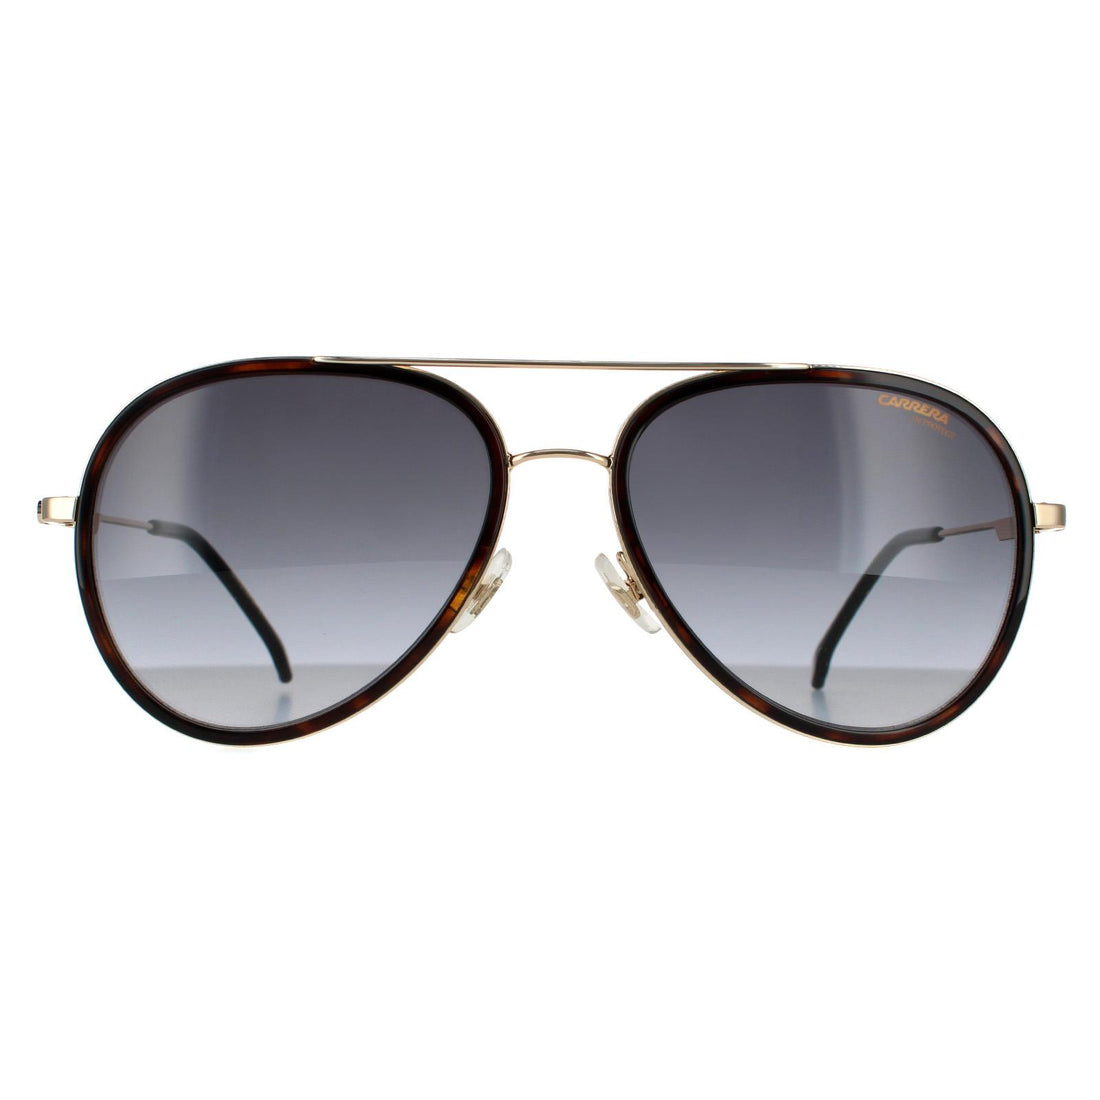 Carrera Sunglasses 1044/S 086 9O Dark Havana Dark Grey Gradient